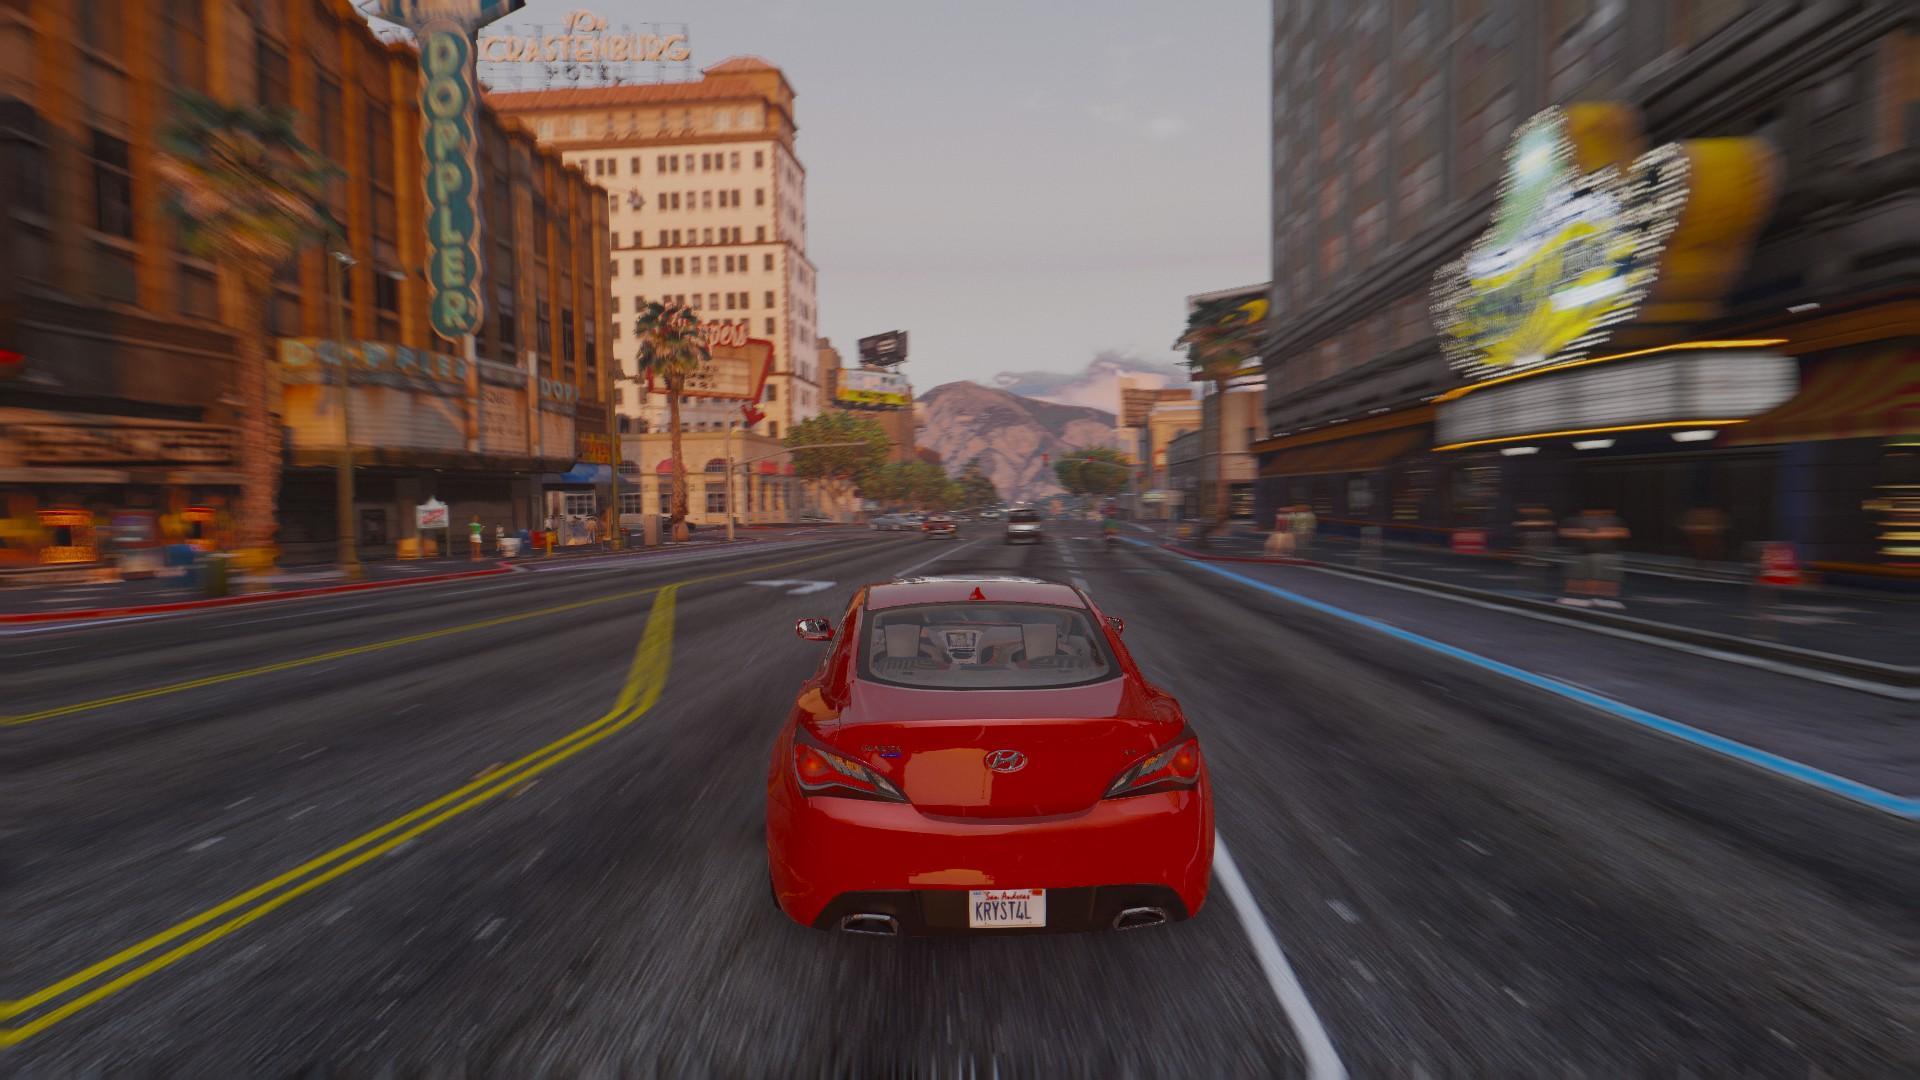 Car Parking Best Engine 2019 screenshot game